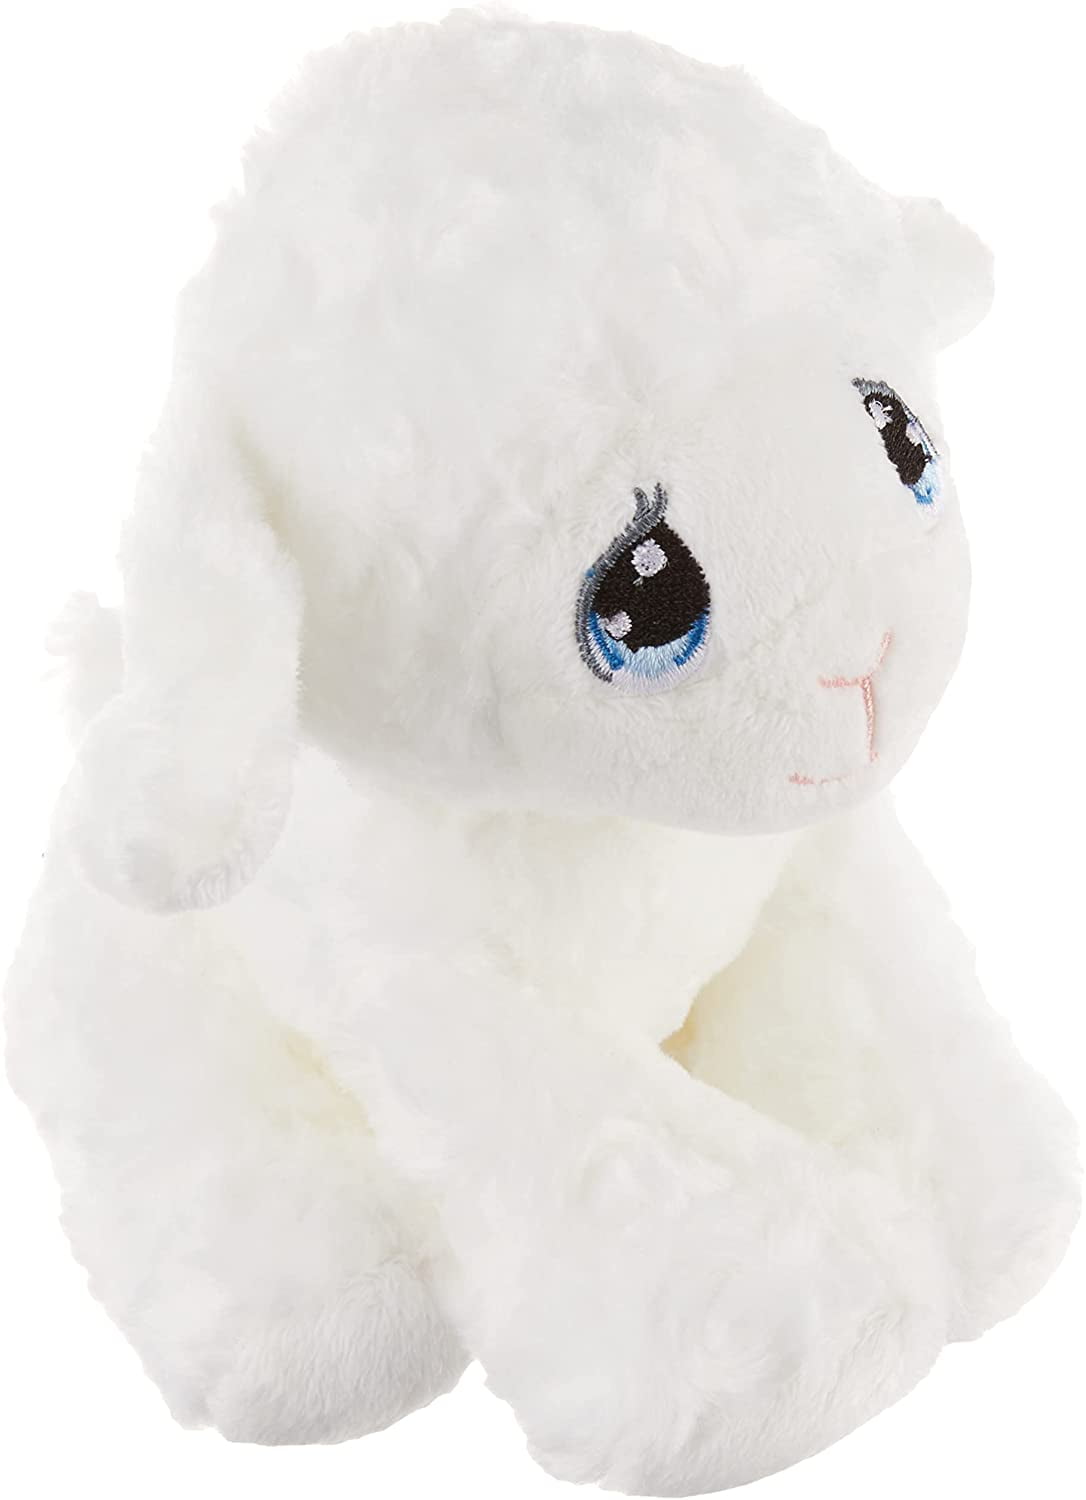 9 Inch Precious Moments Grey Floppy Bunny Plush Stuffed Animal by Aurora for sale online 